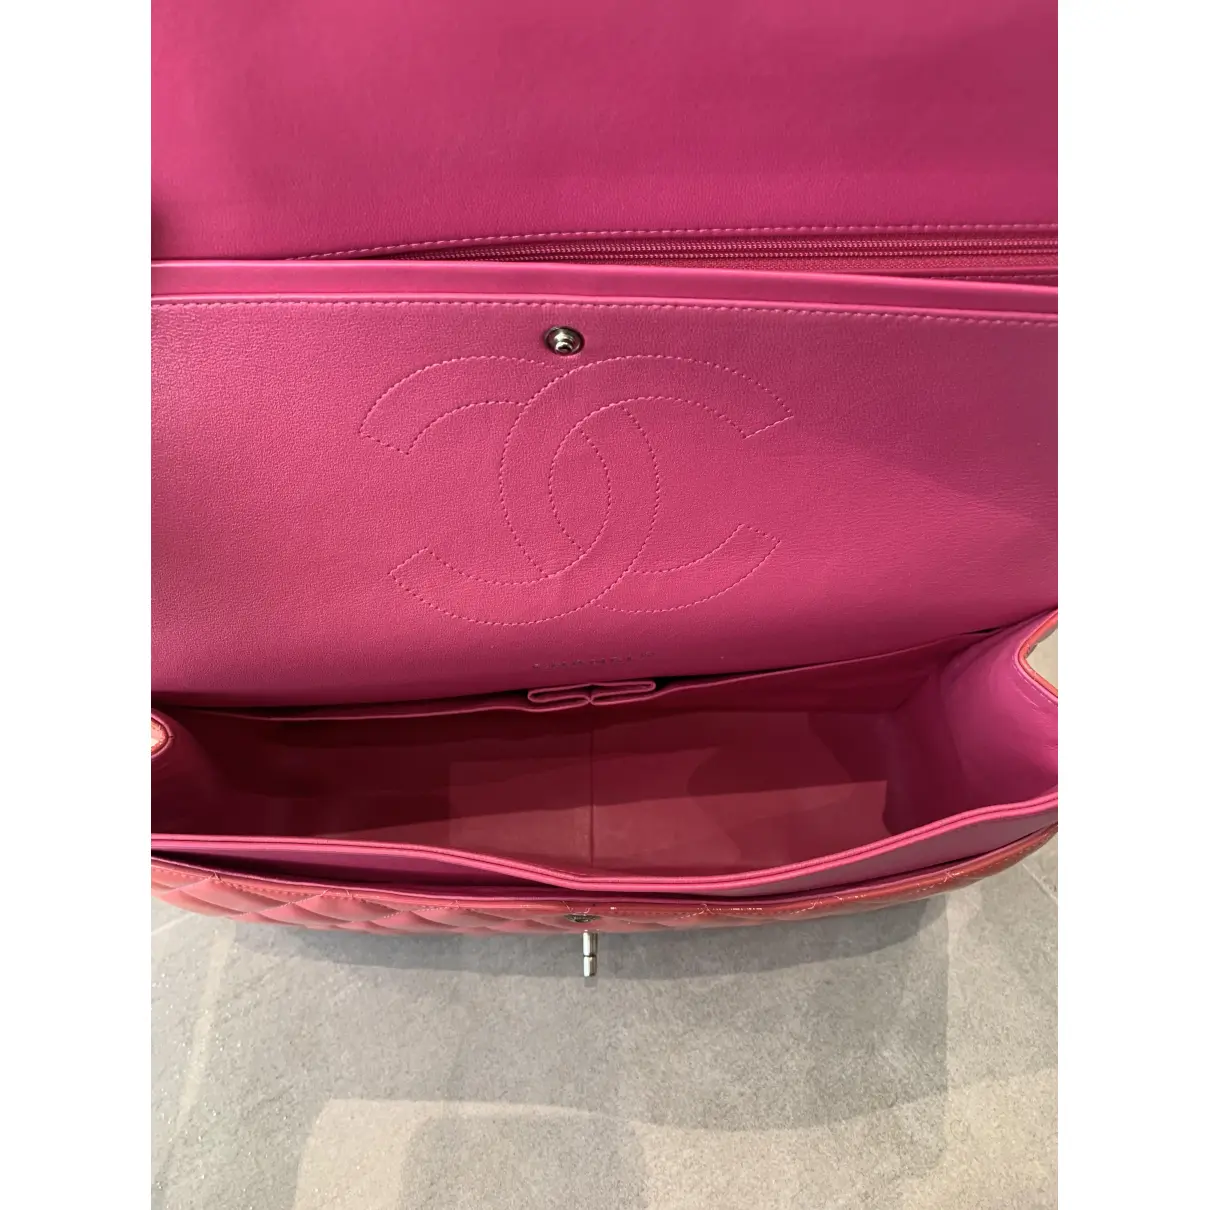 Timeless/Classique patent leather handbag Chanel